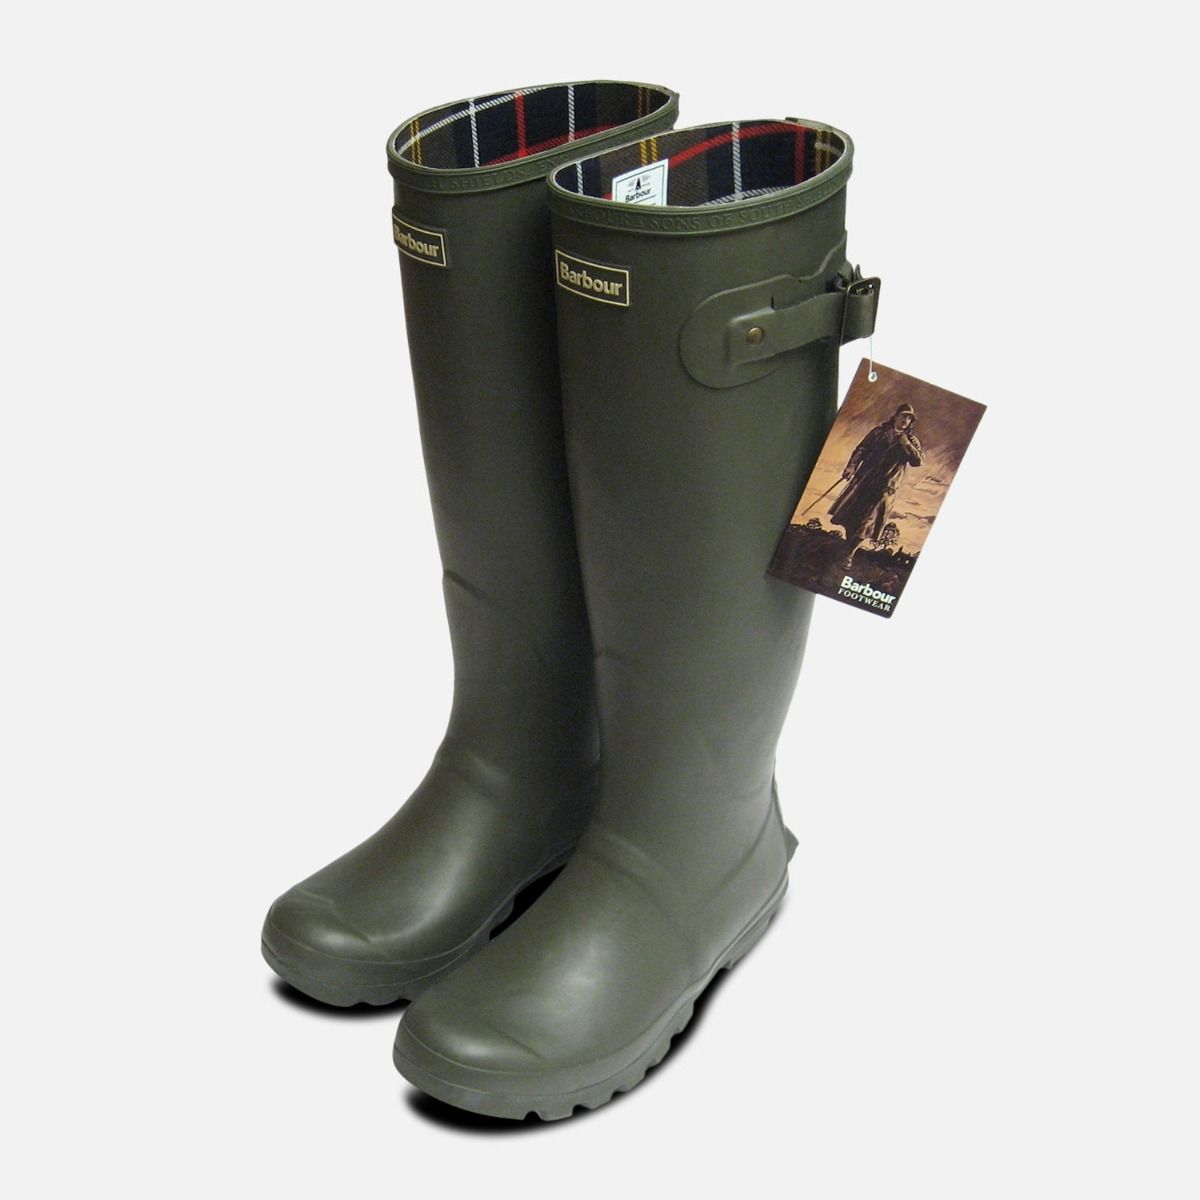 green wellington boots